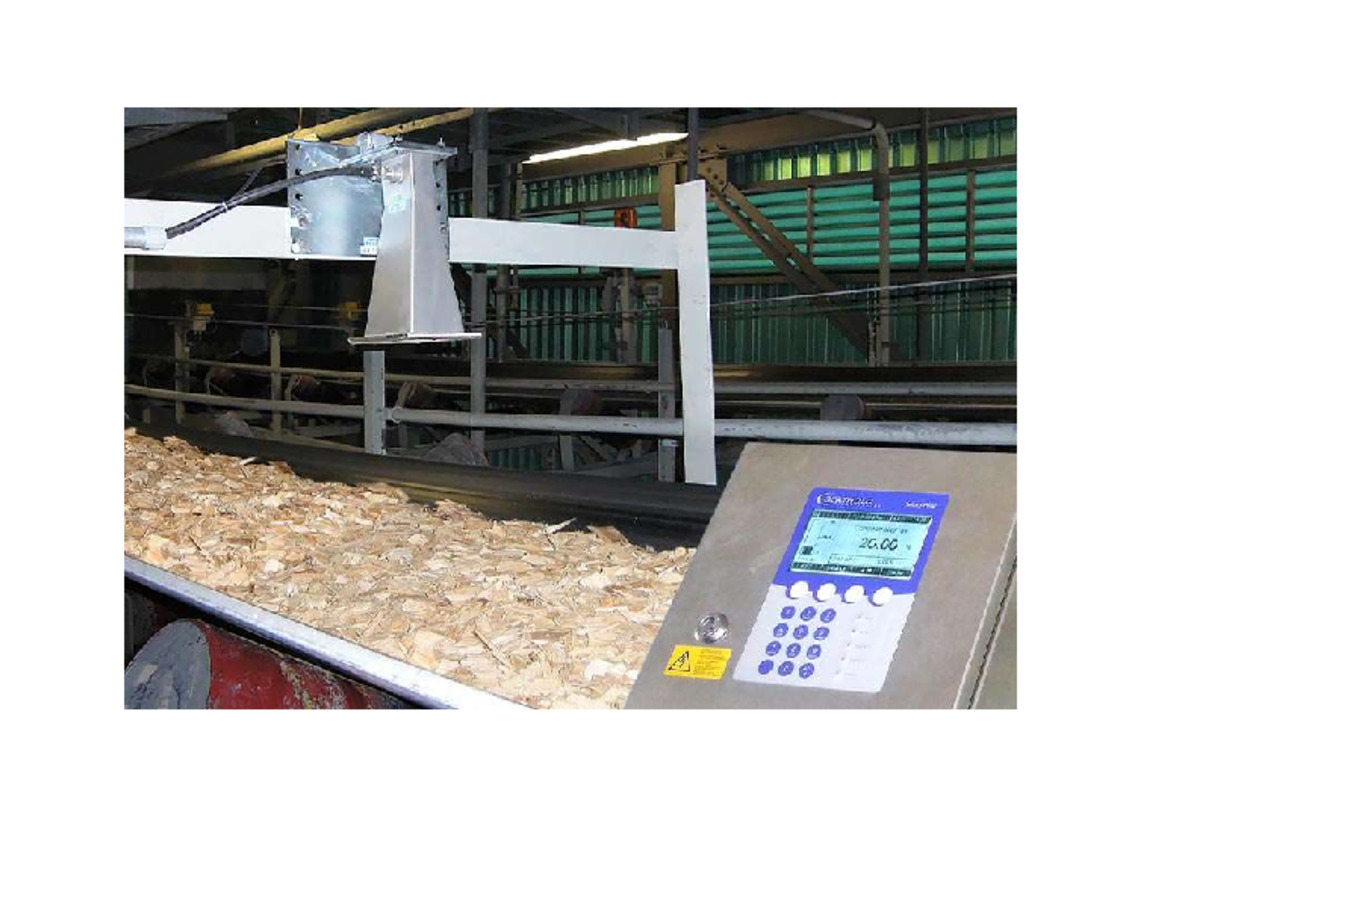 Moisture measurement of wood chips